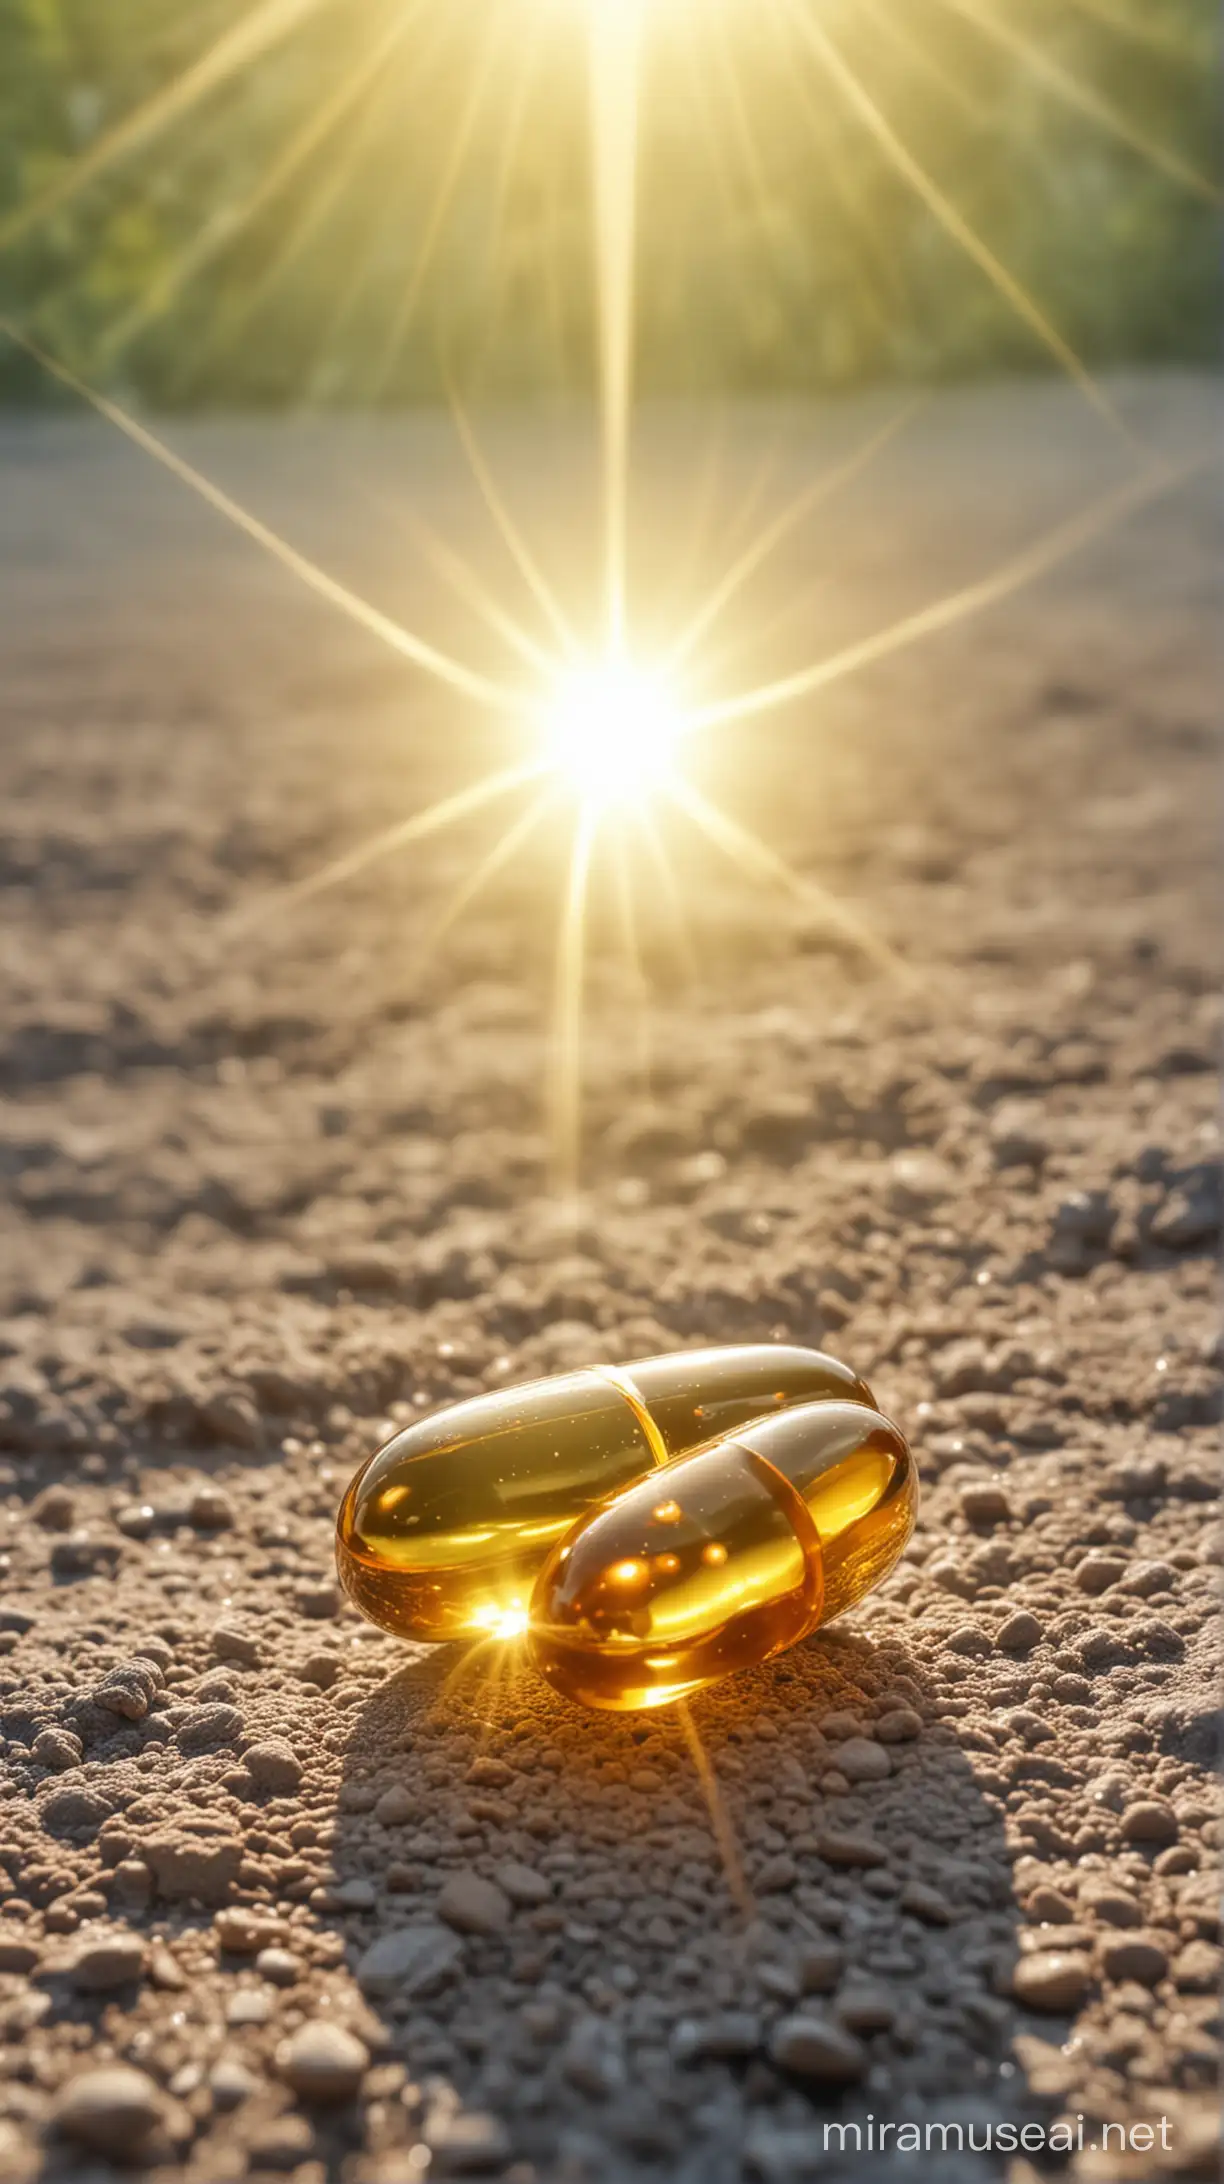 vitamin k capsule, natural background, sun light effect, 4k, HDR, morning time weather